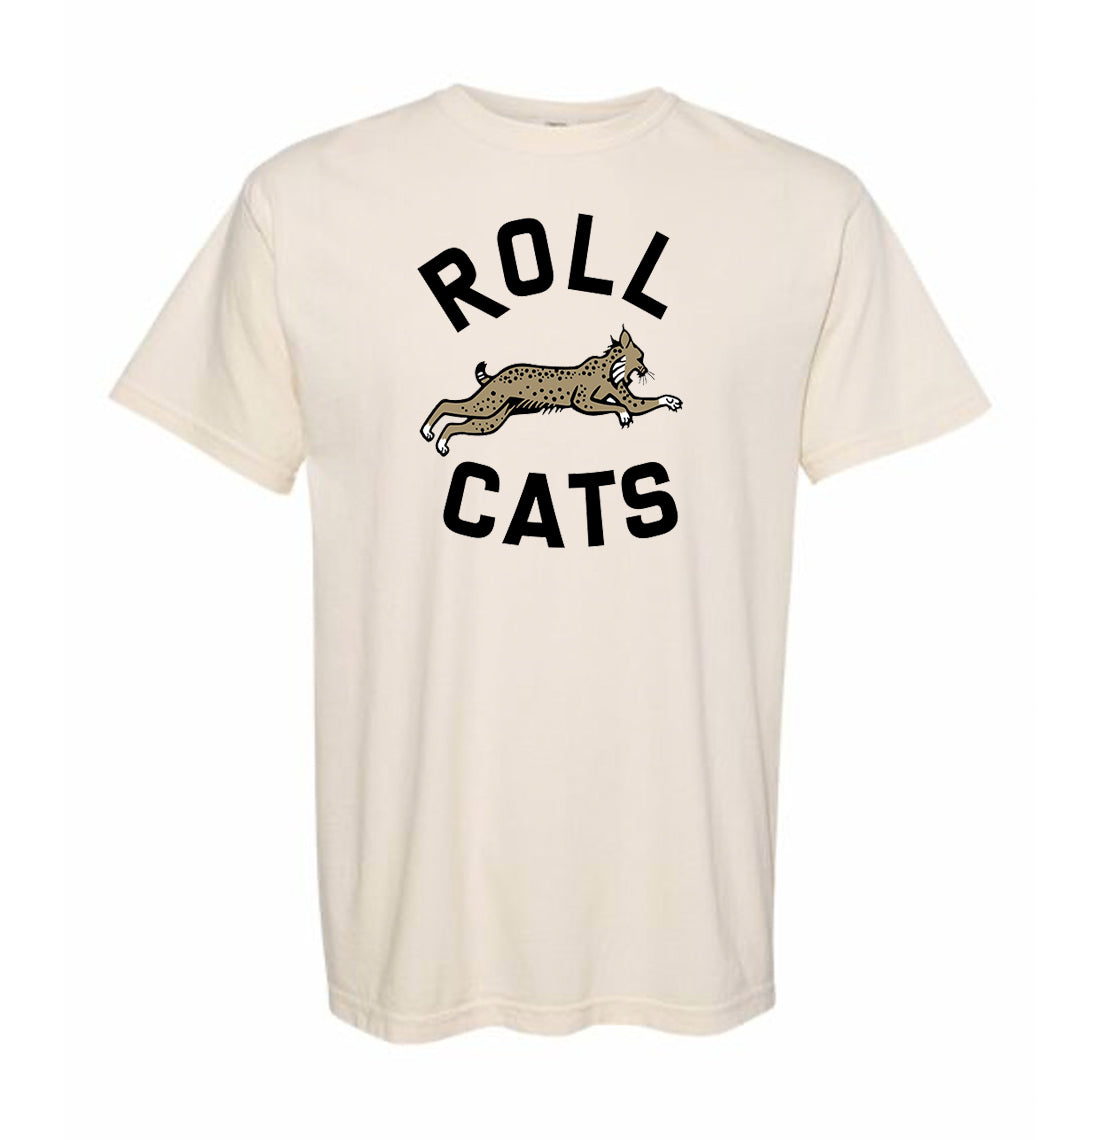 Roll Cats Unisex Tee